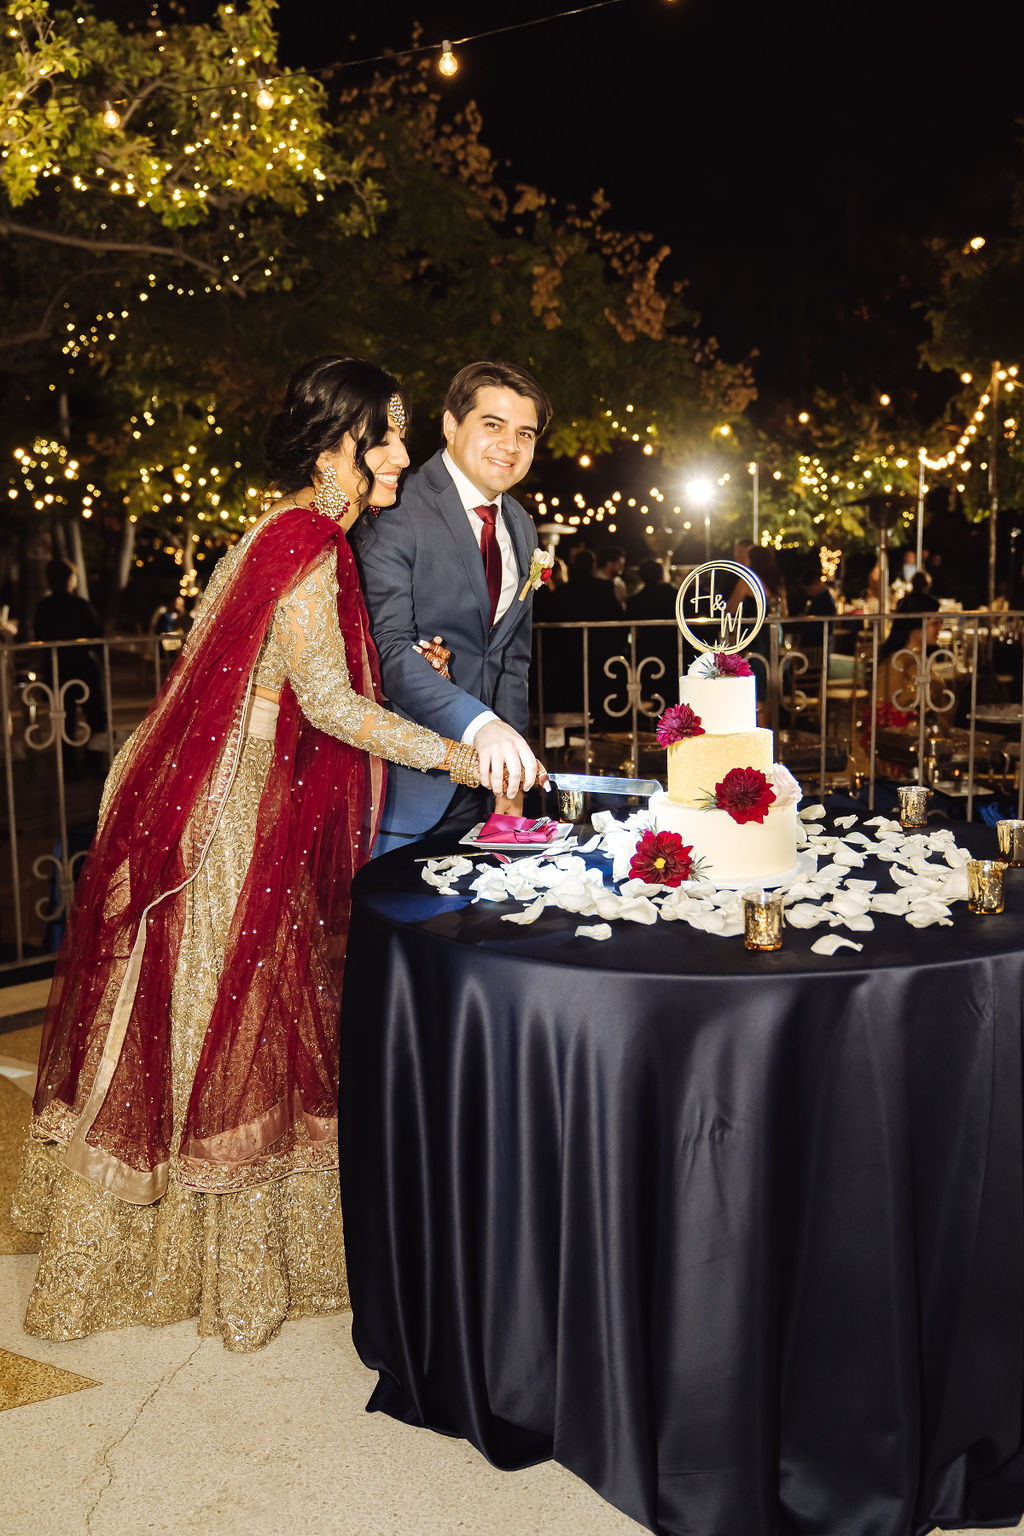 bride in embellished gold wedding saree with groom in dark grey suit and maroon tie cut wedding cake